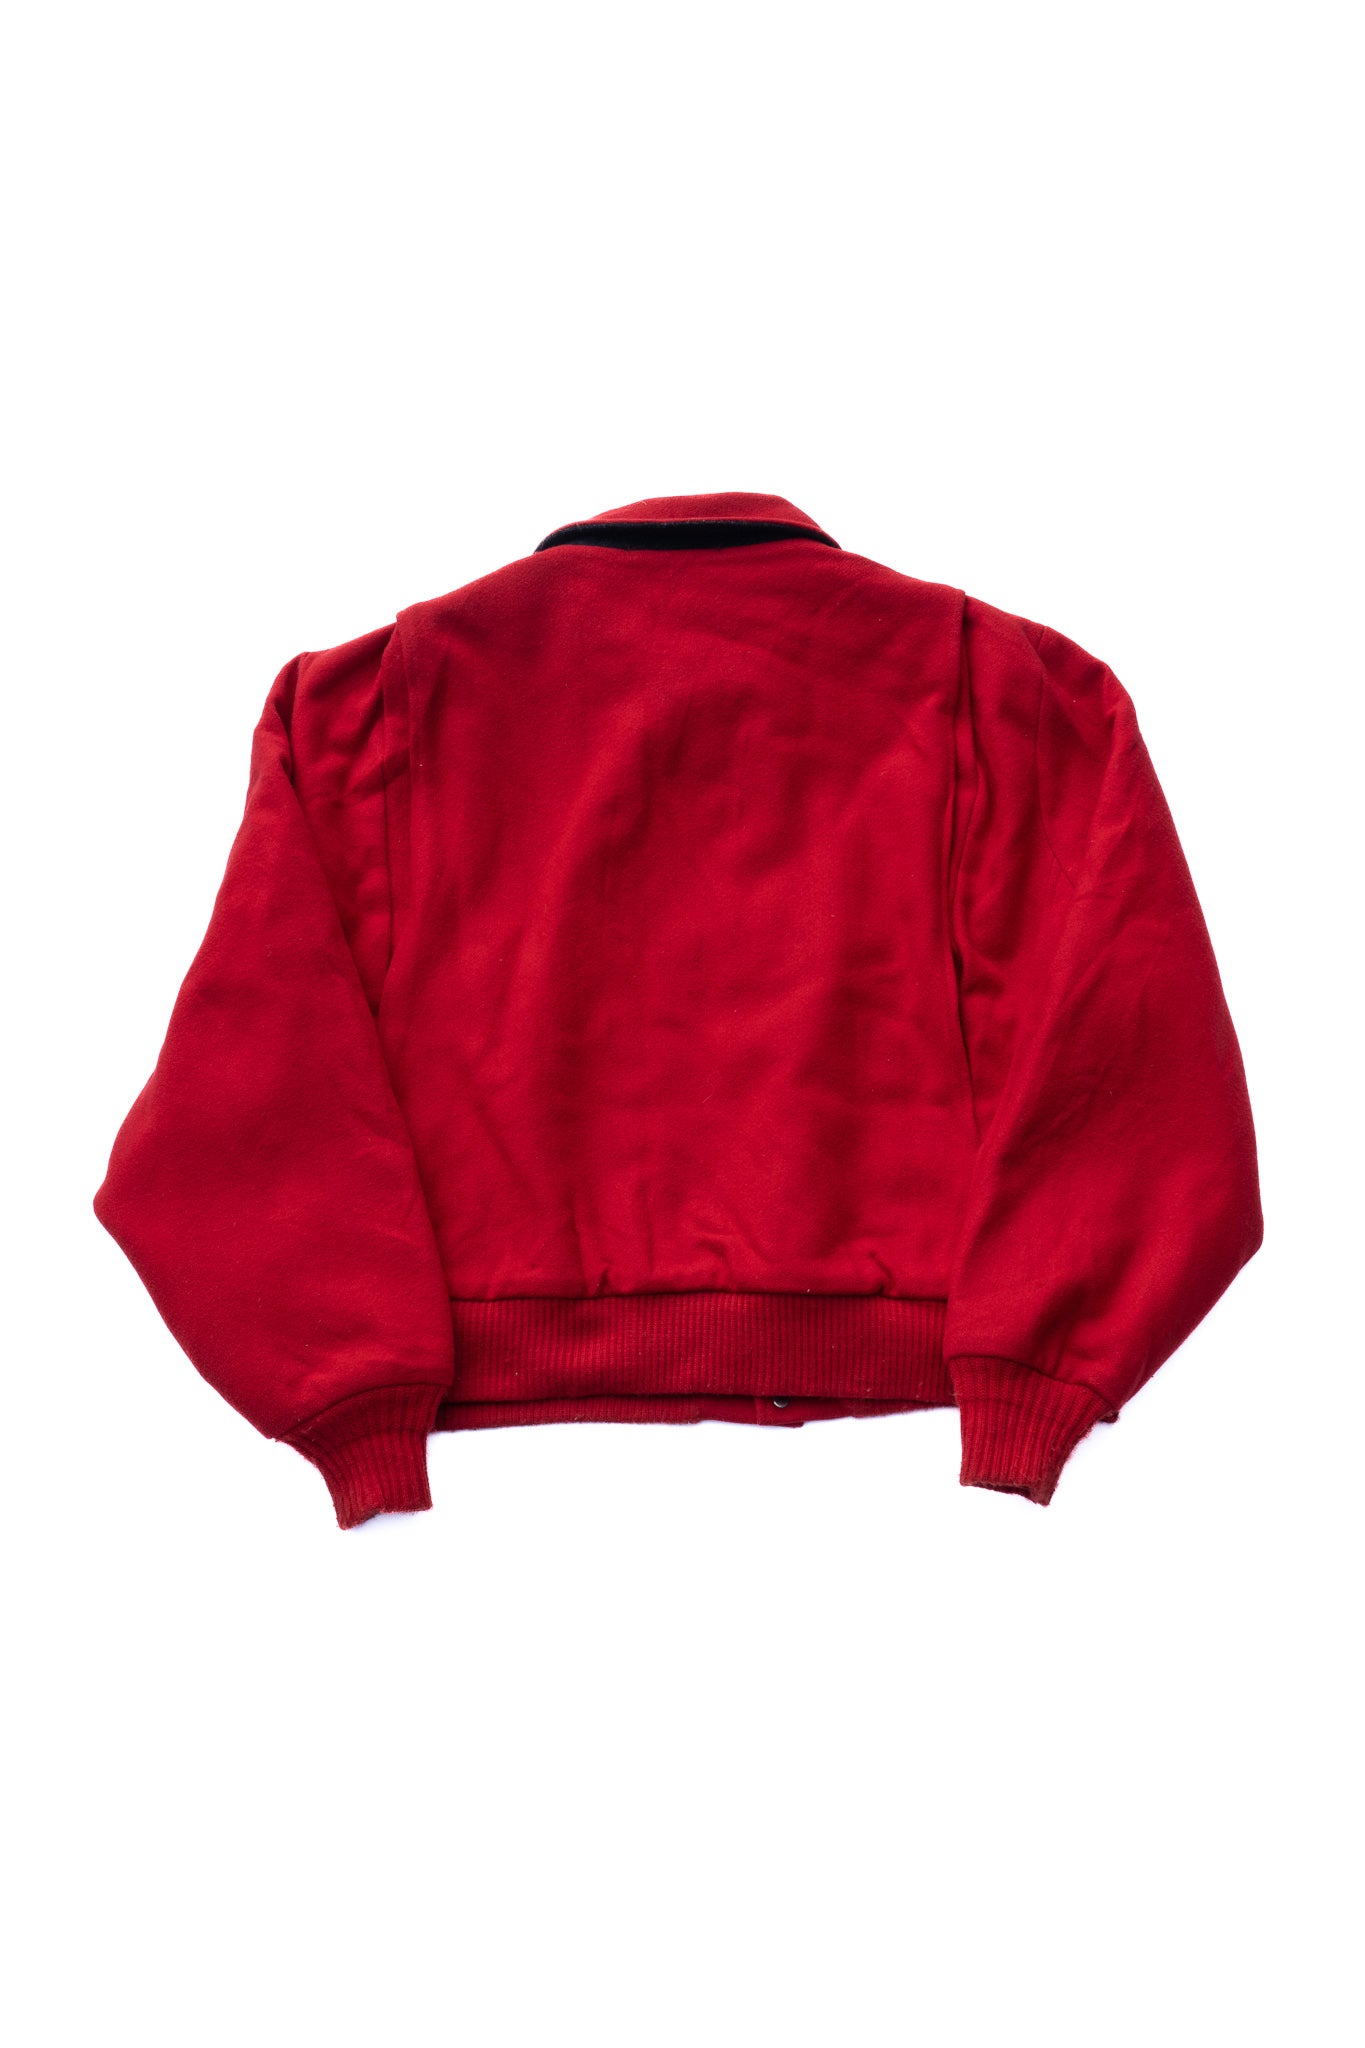 Woolrich Red Jacket